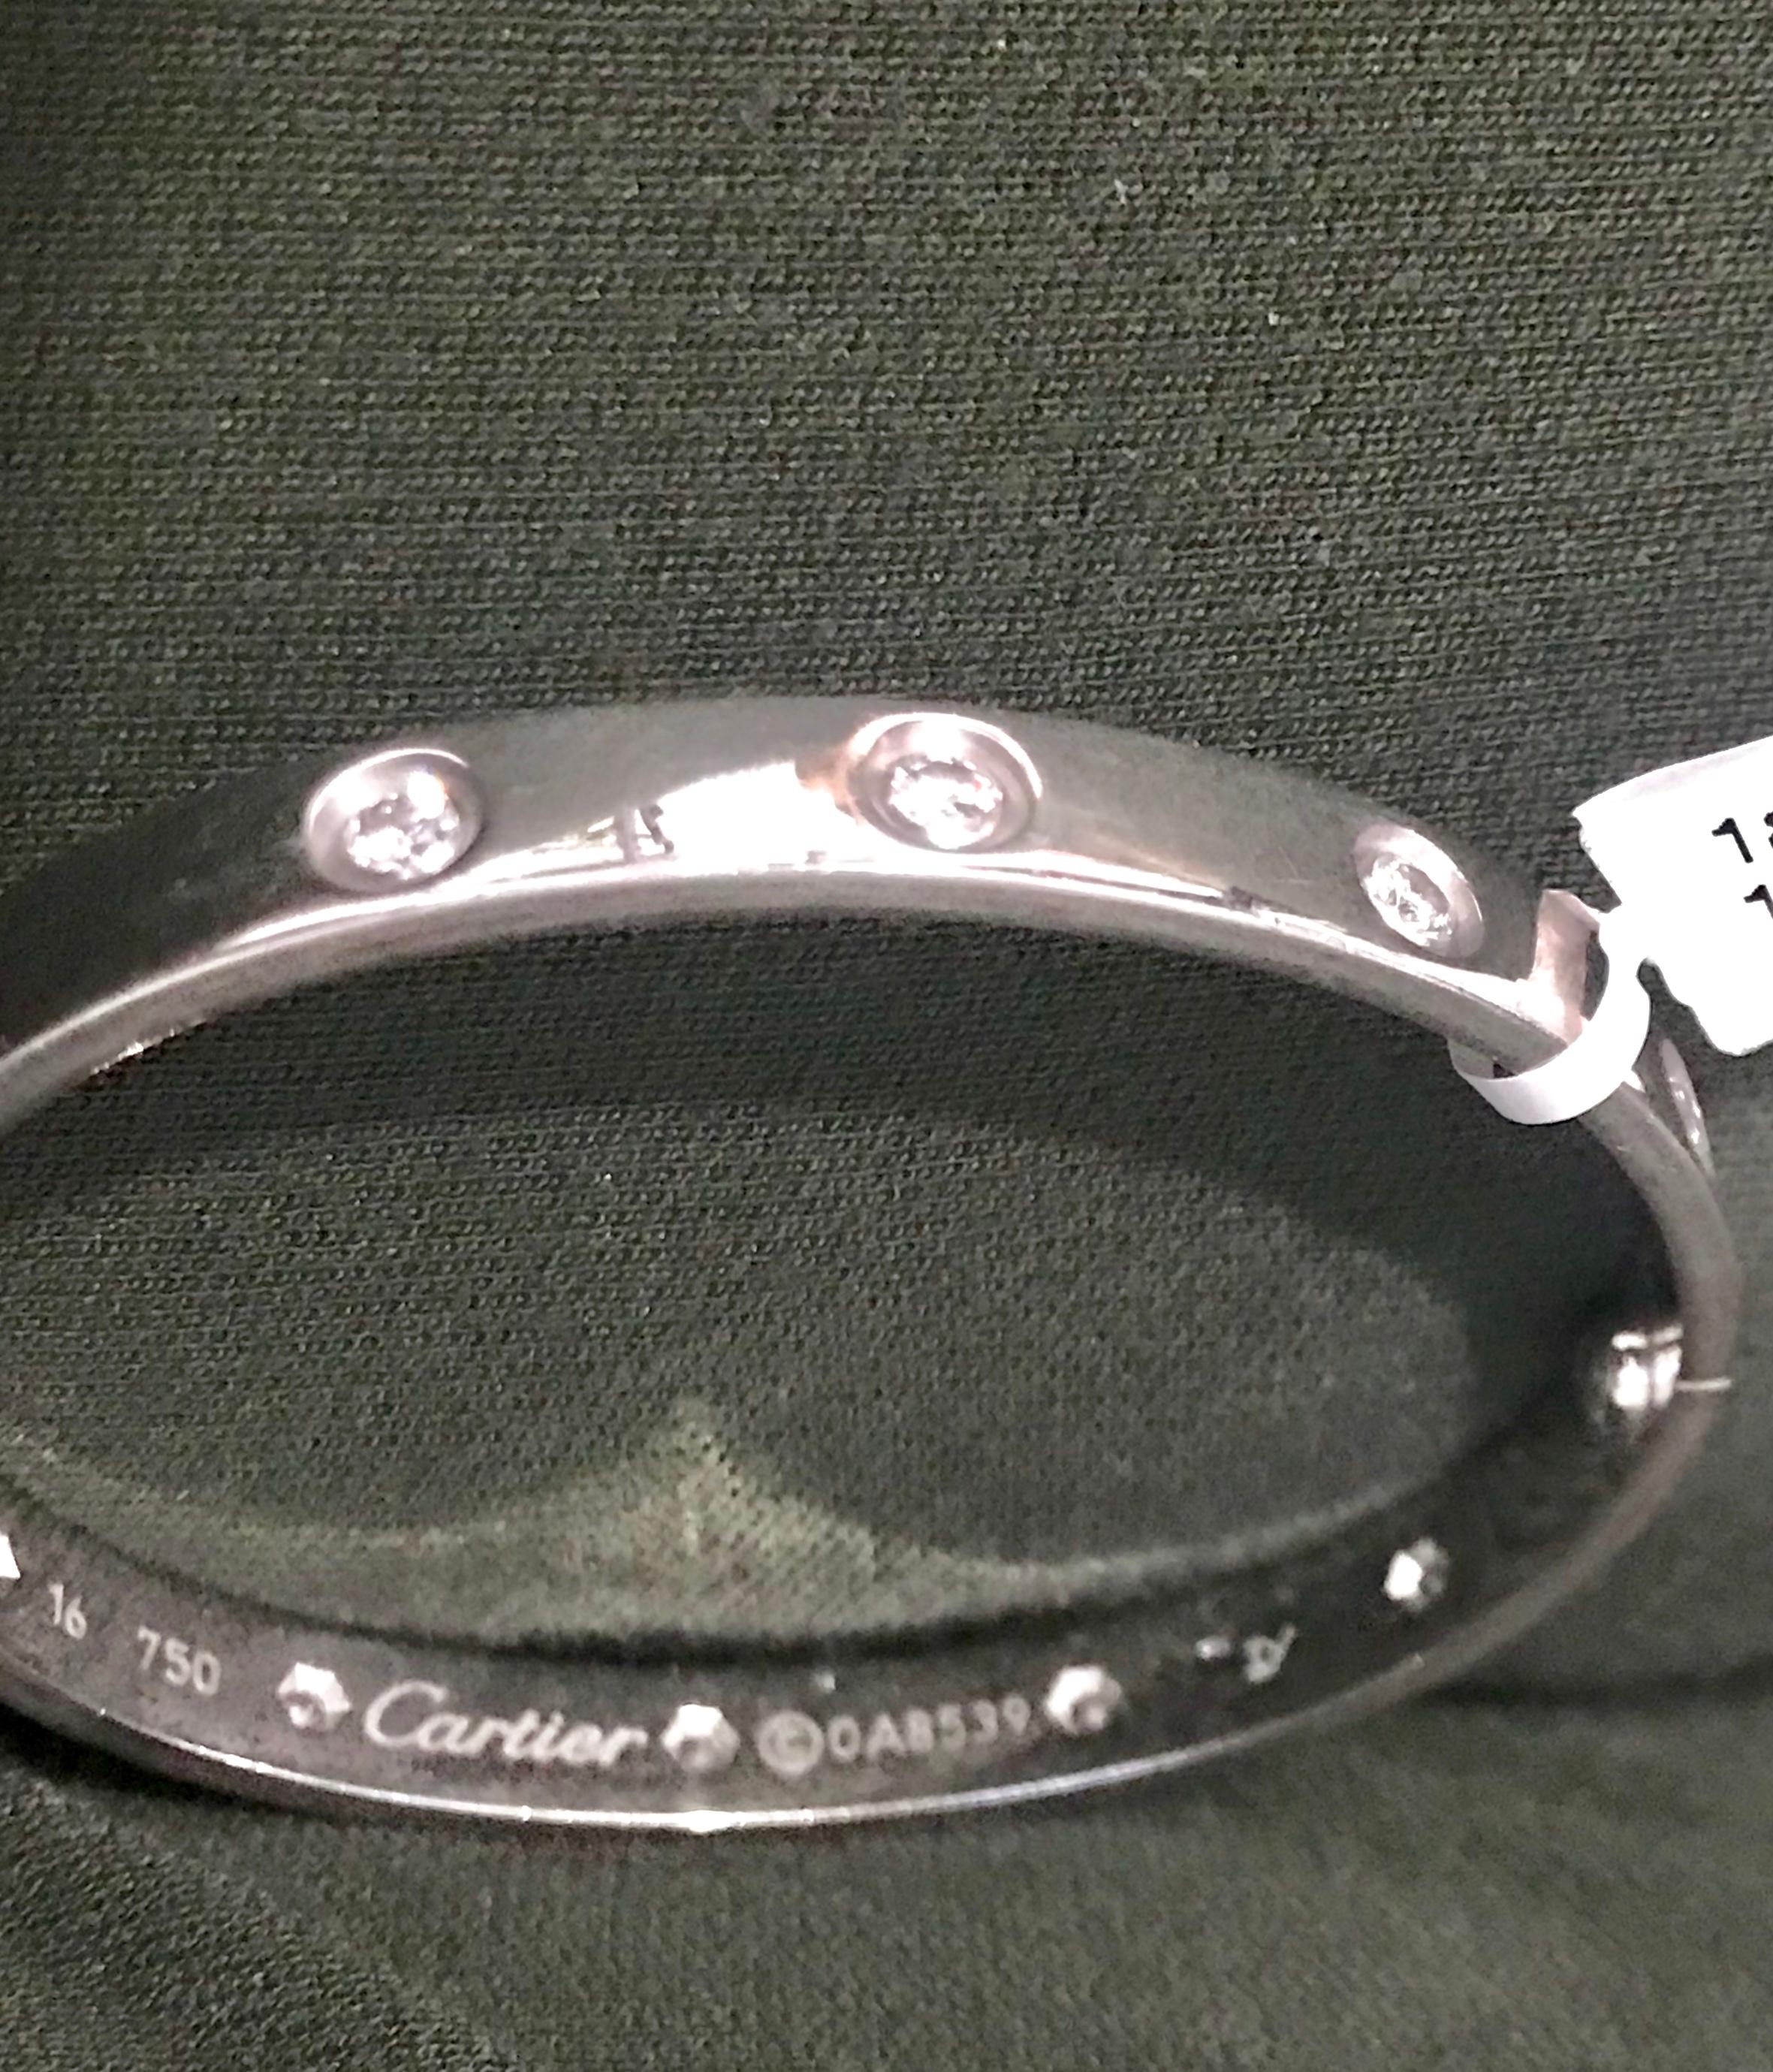 cartier bracelet 750 17 ip 6688 price